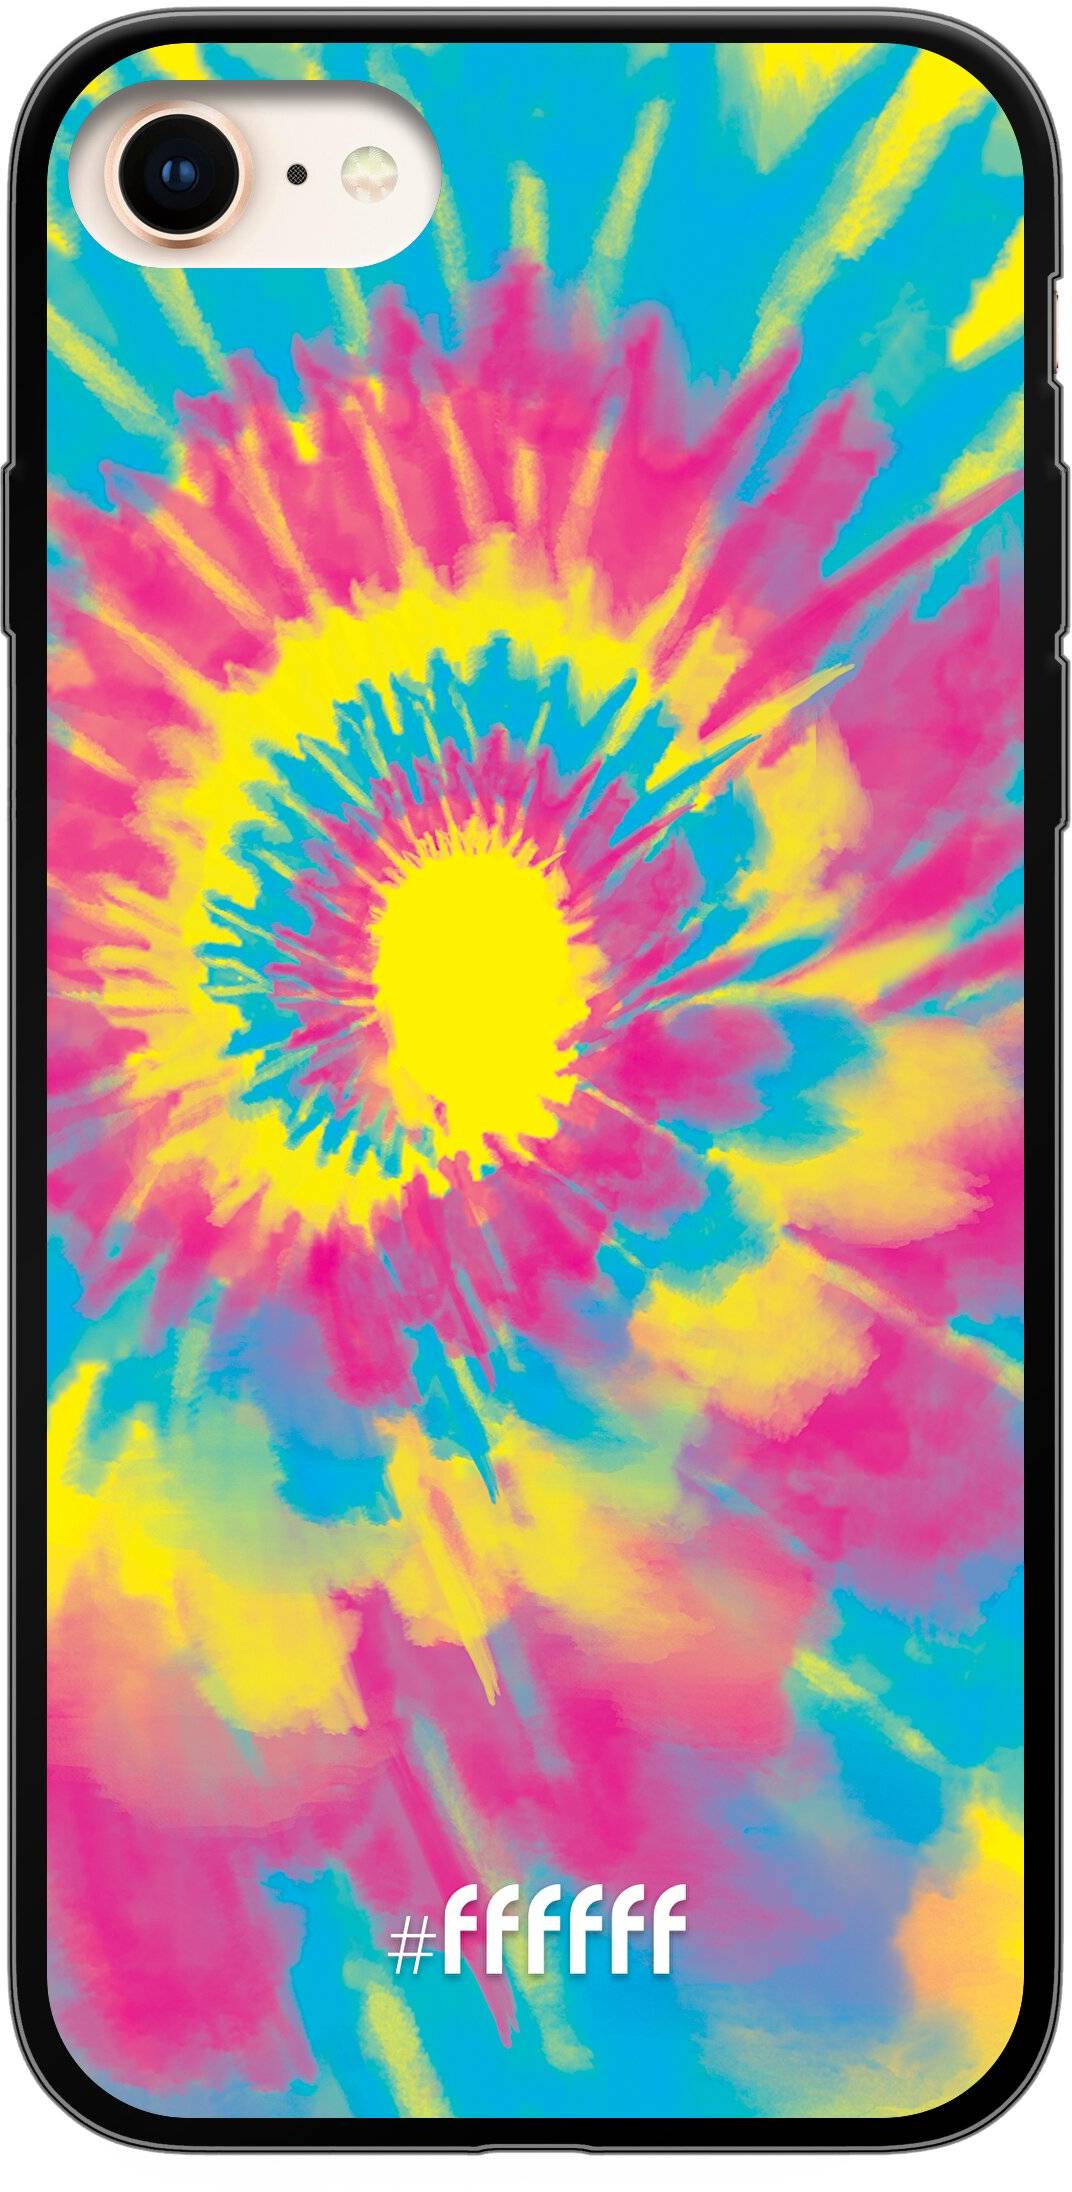 Psychedelic Tie Dye iPhone 7